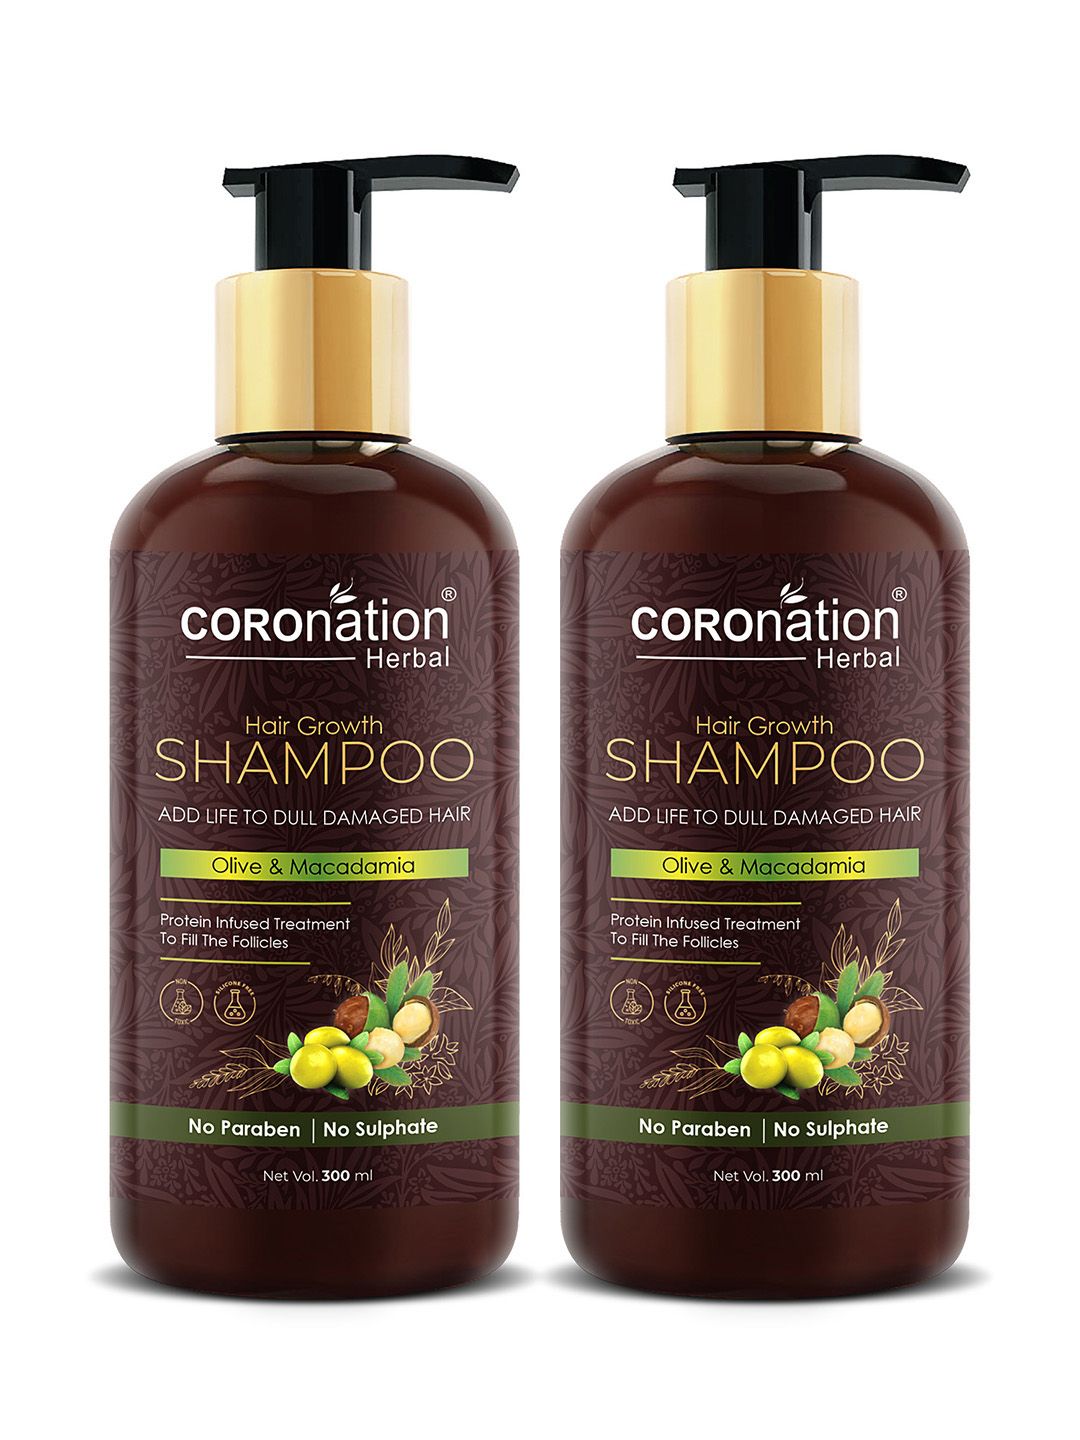 COROnation Herbal Set of 2 Olive & Macadamia Hair Growth Shampoo 300 ml Each Price in India